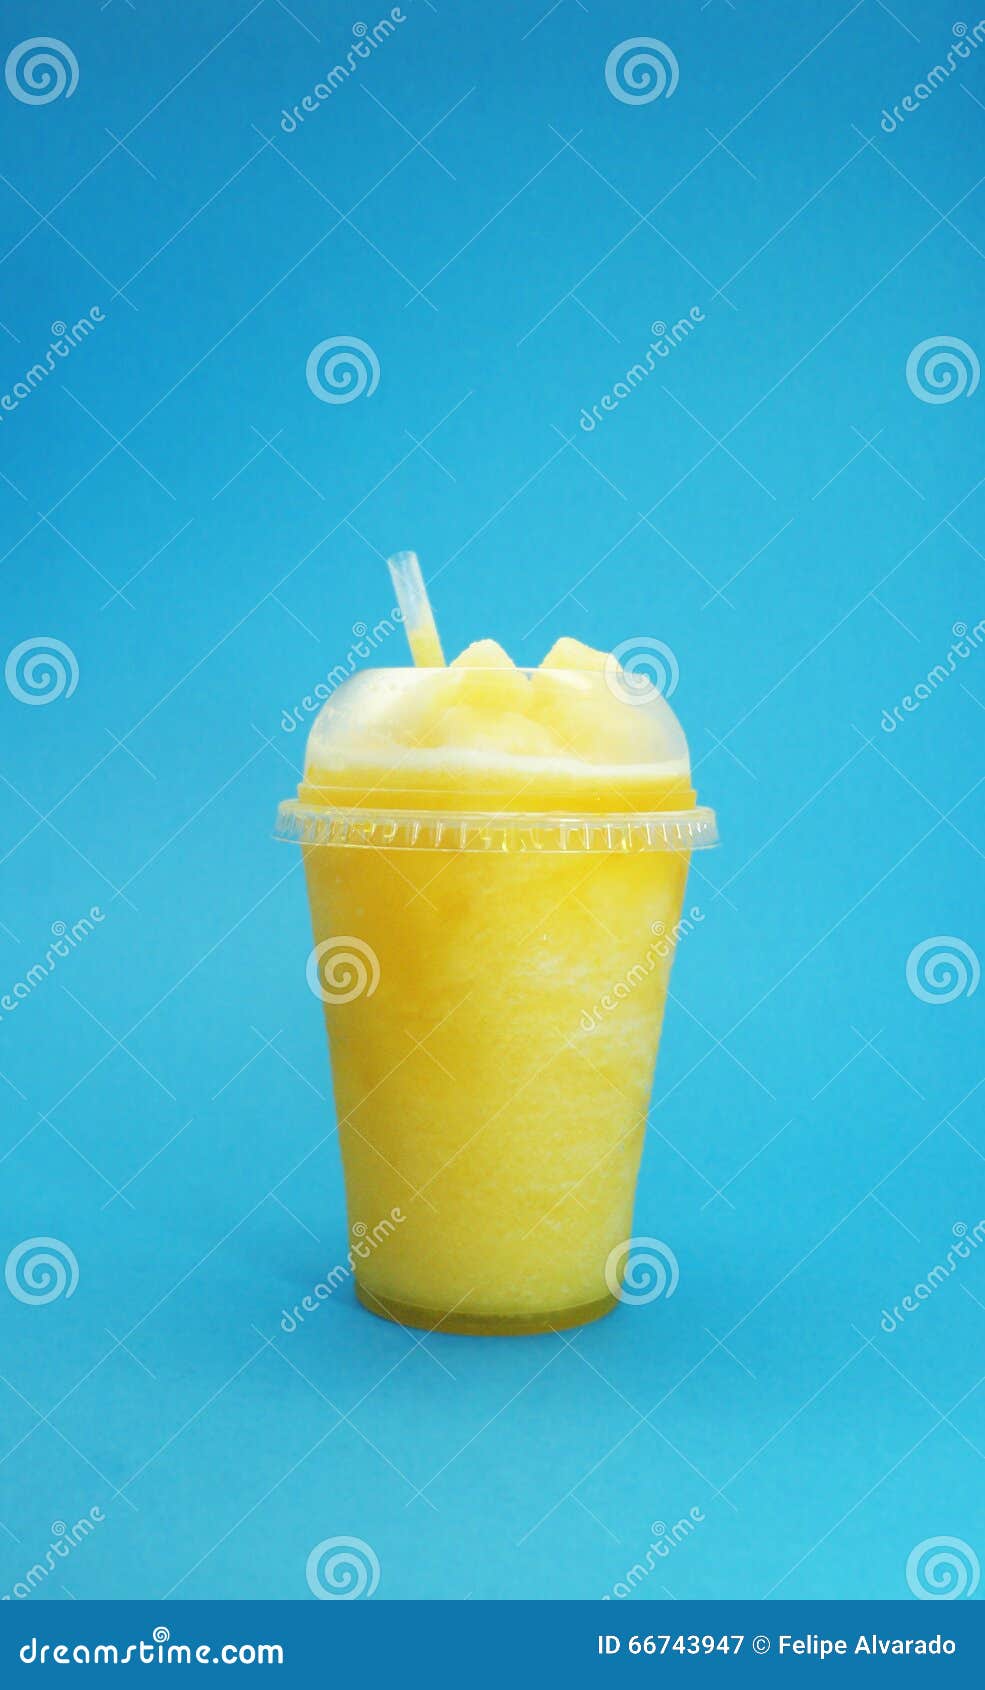 Download Mango Smoothie On Yellow Background Stock Image Image Of Fruit Straw 66743947 Yellowimages Mockups